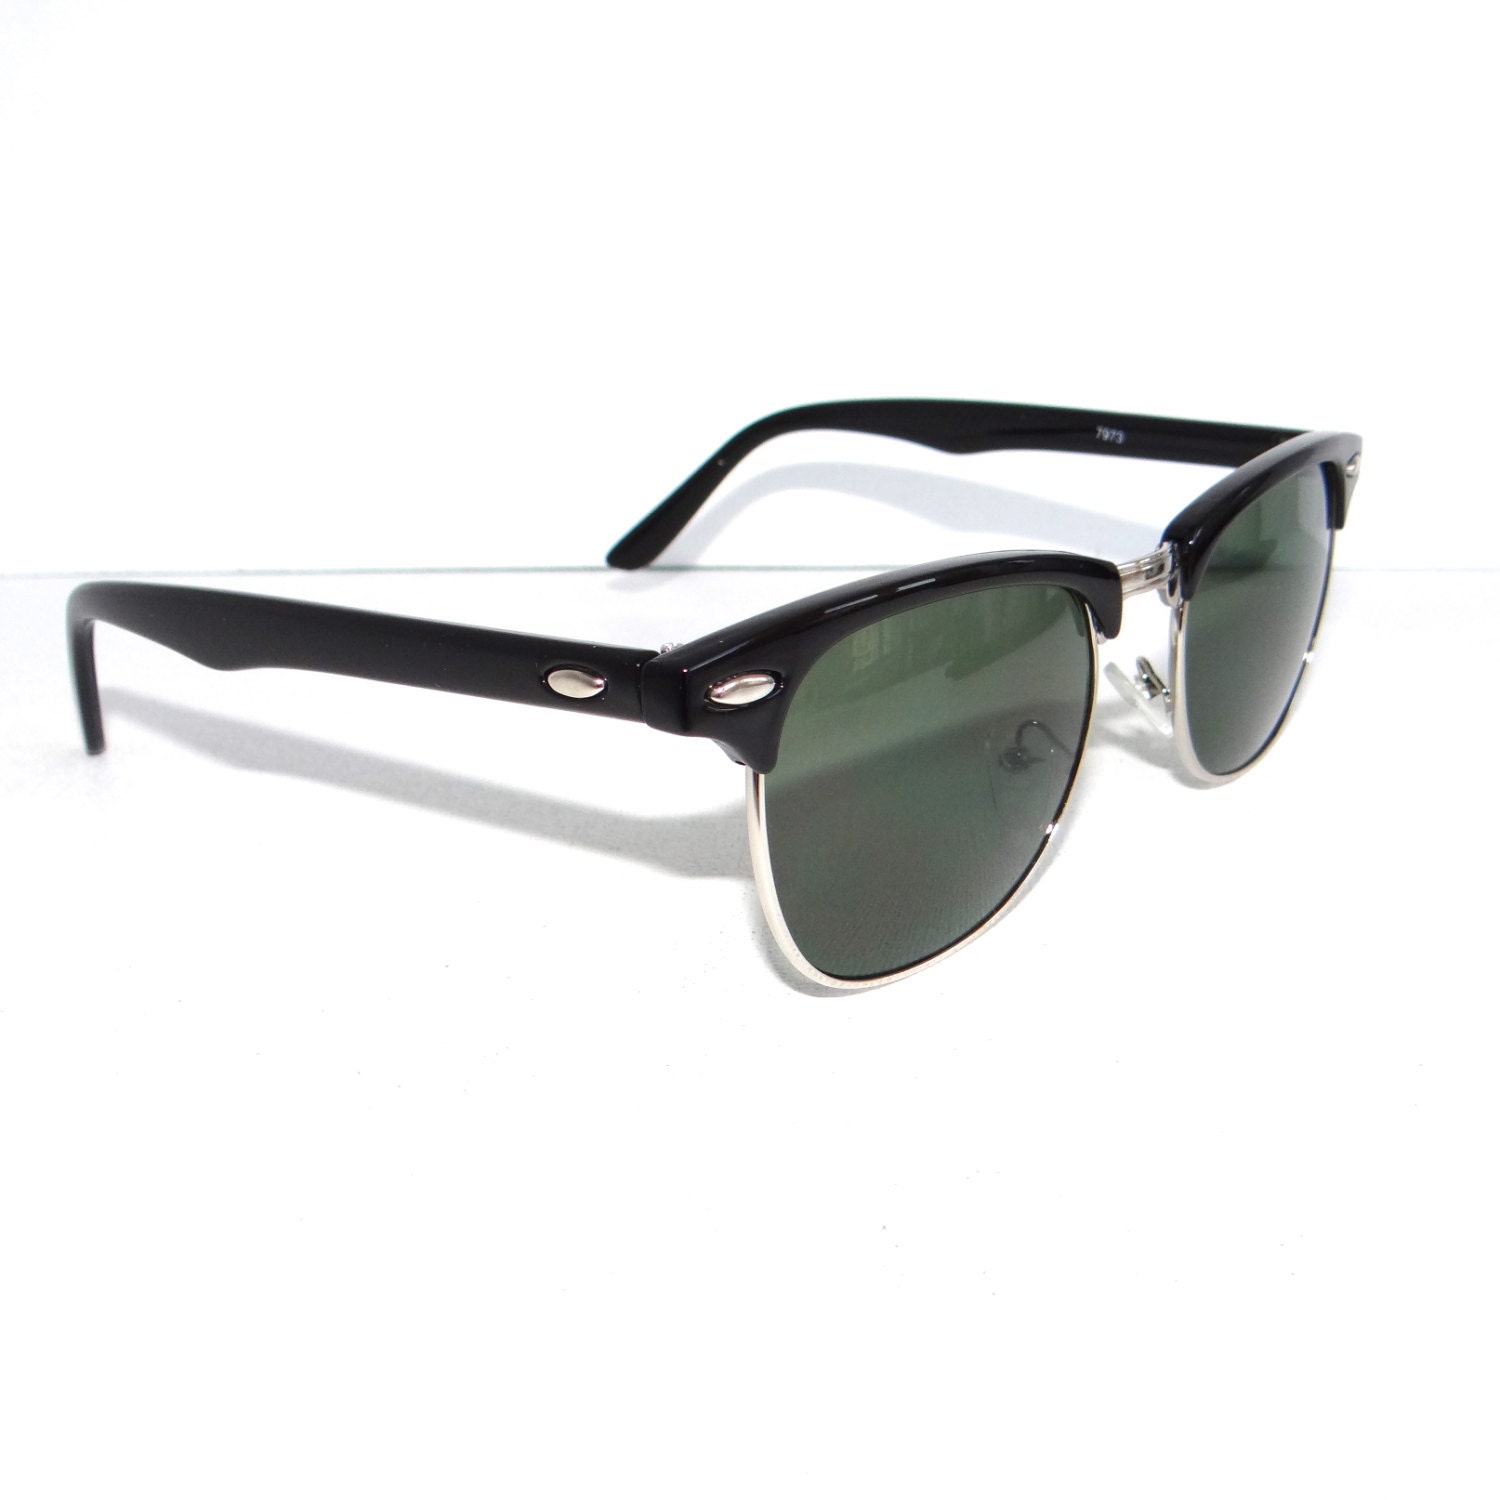 Vintage Clubmaster Sunglasses 34